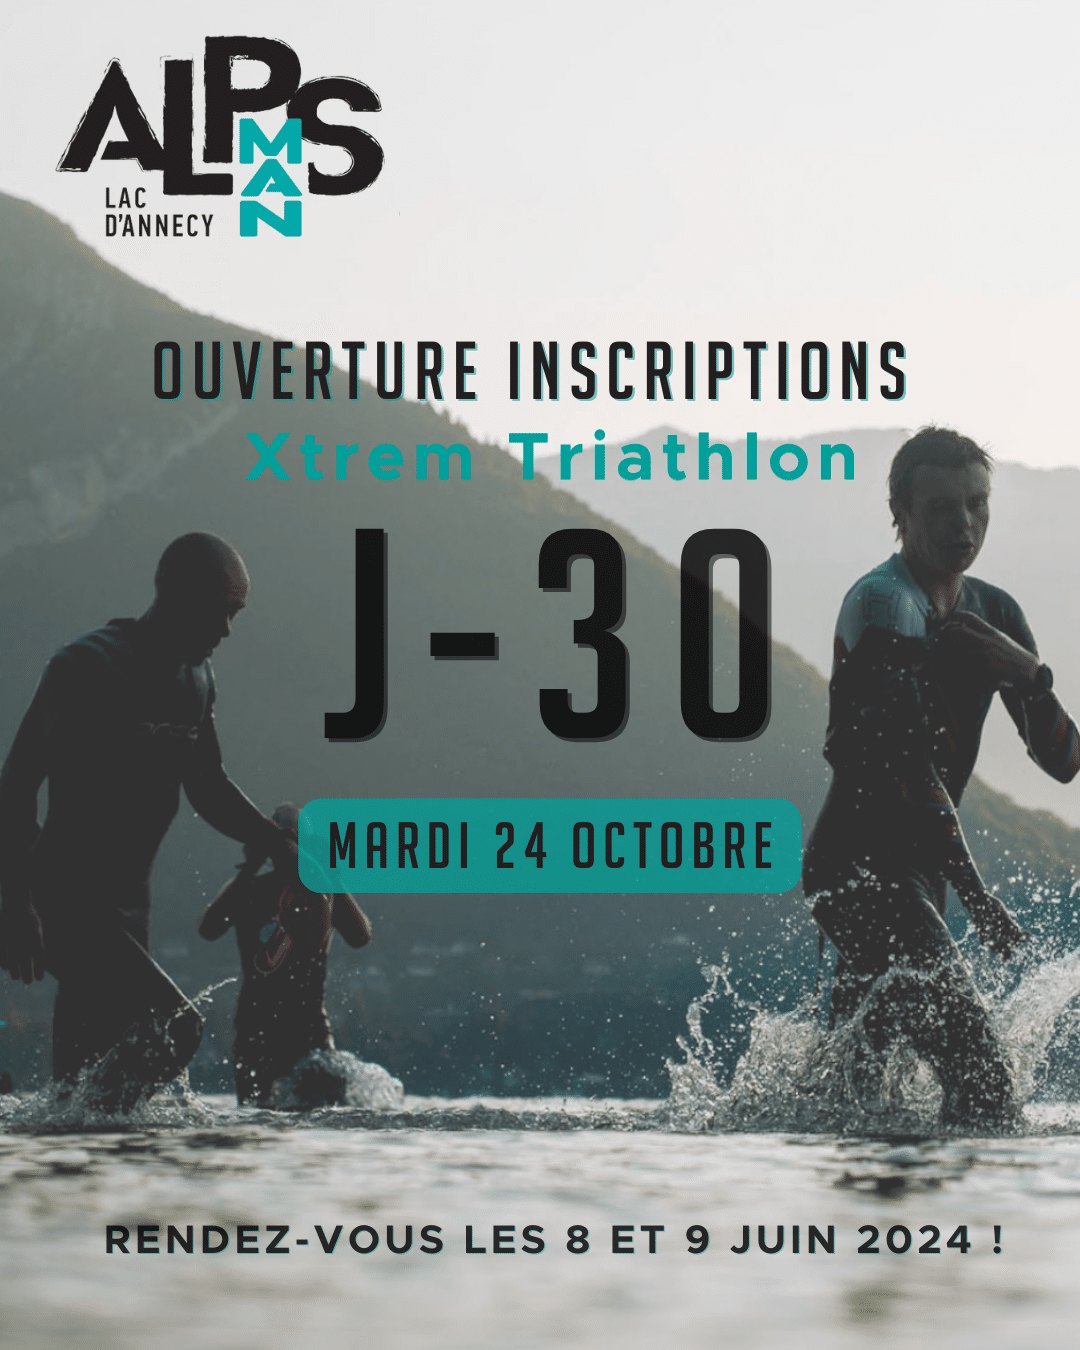 Inscriptions triathlon AlpsMan 2024 à Annecy